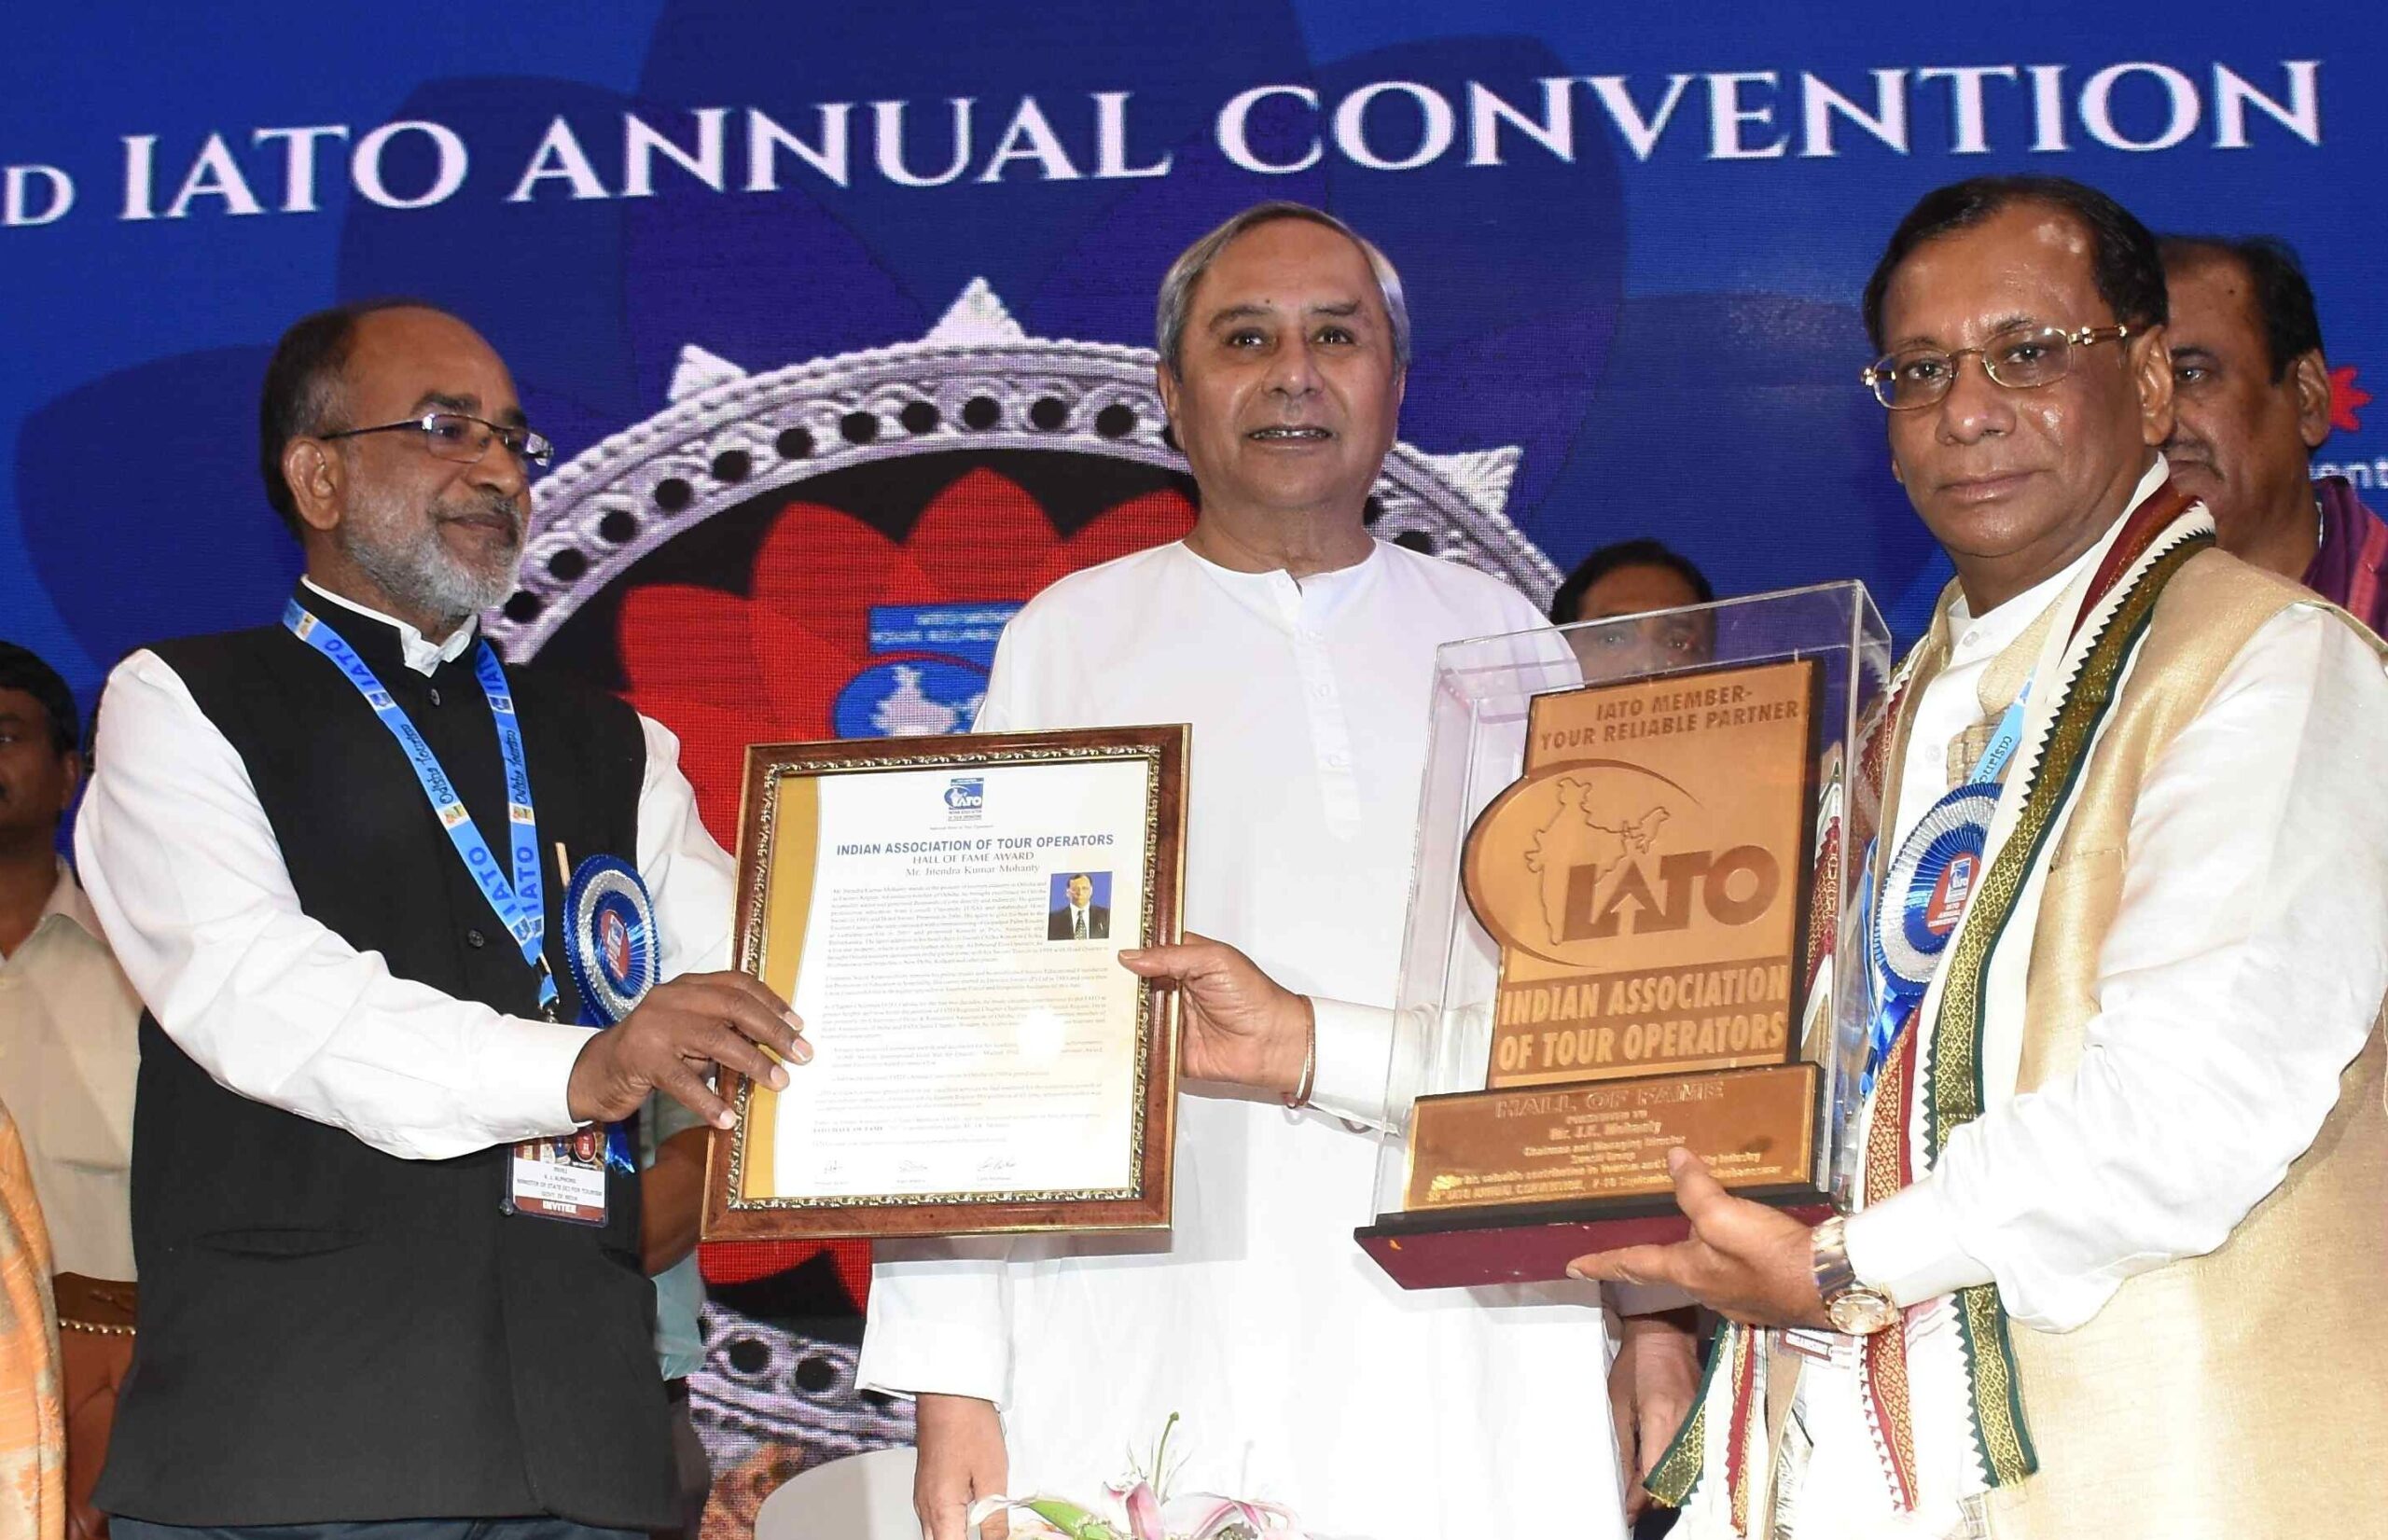 Hall of Fame Award receiving from Union Tourism Minister Sri K J Alphons and Hon'ble CM Sri Naveen Patnaik